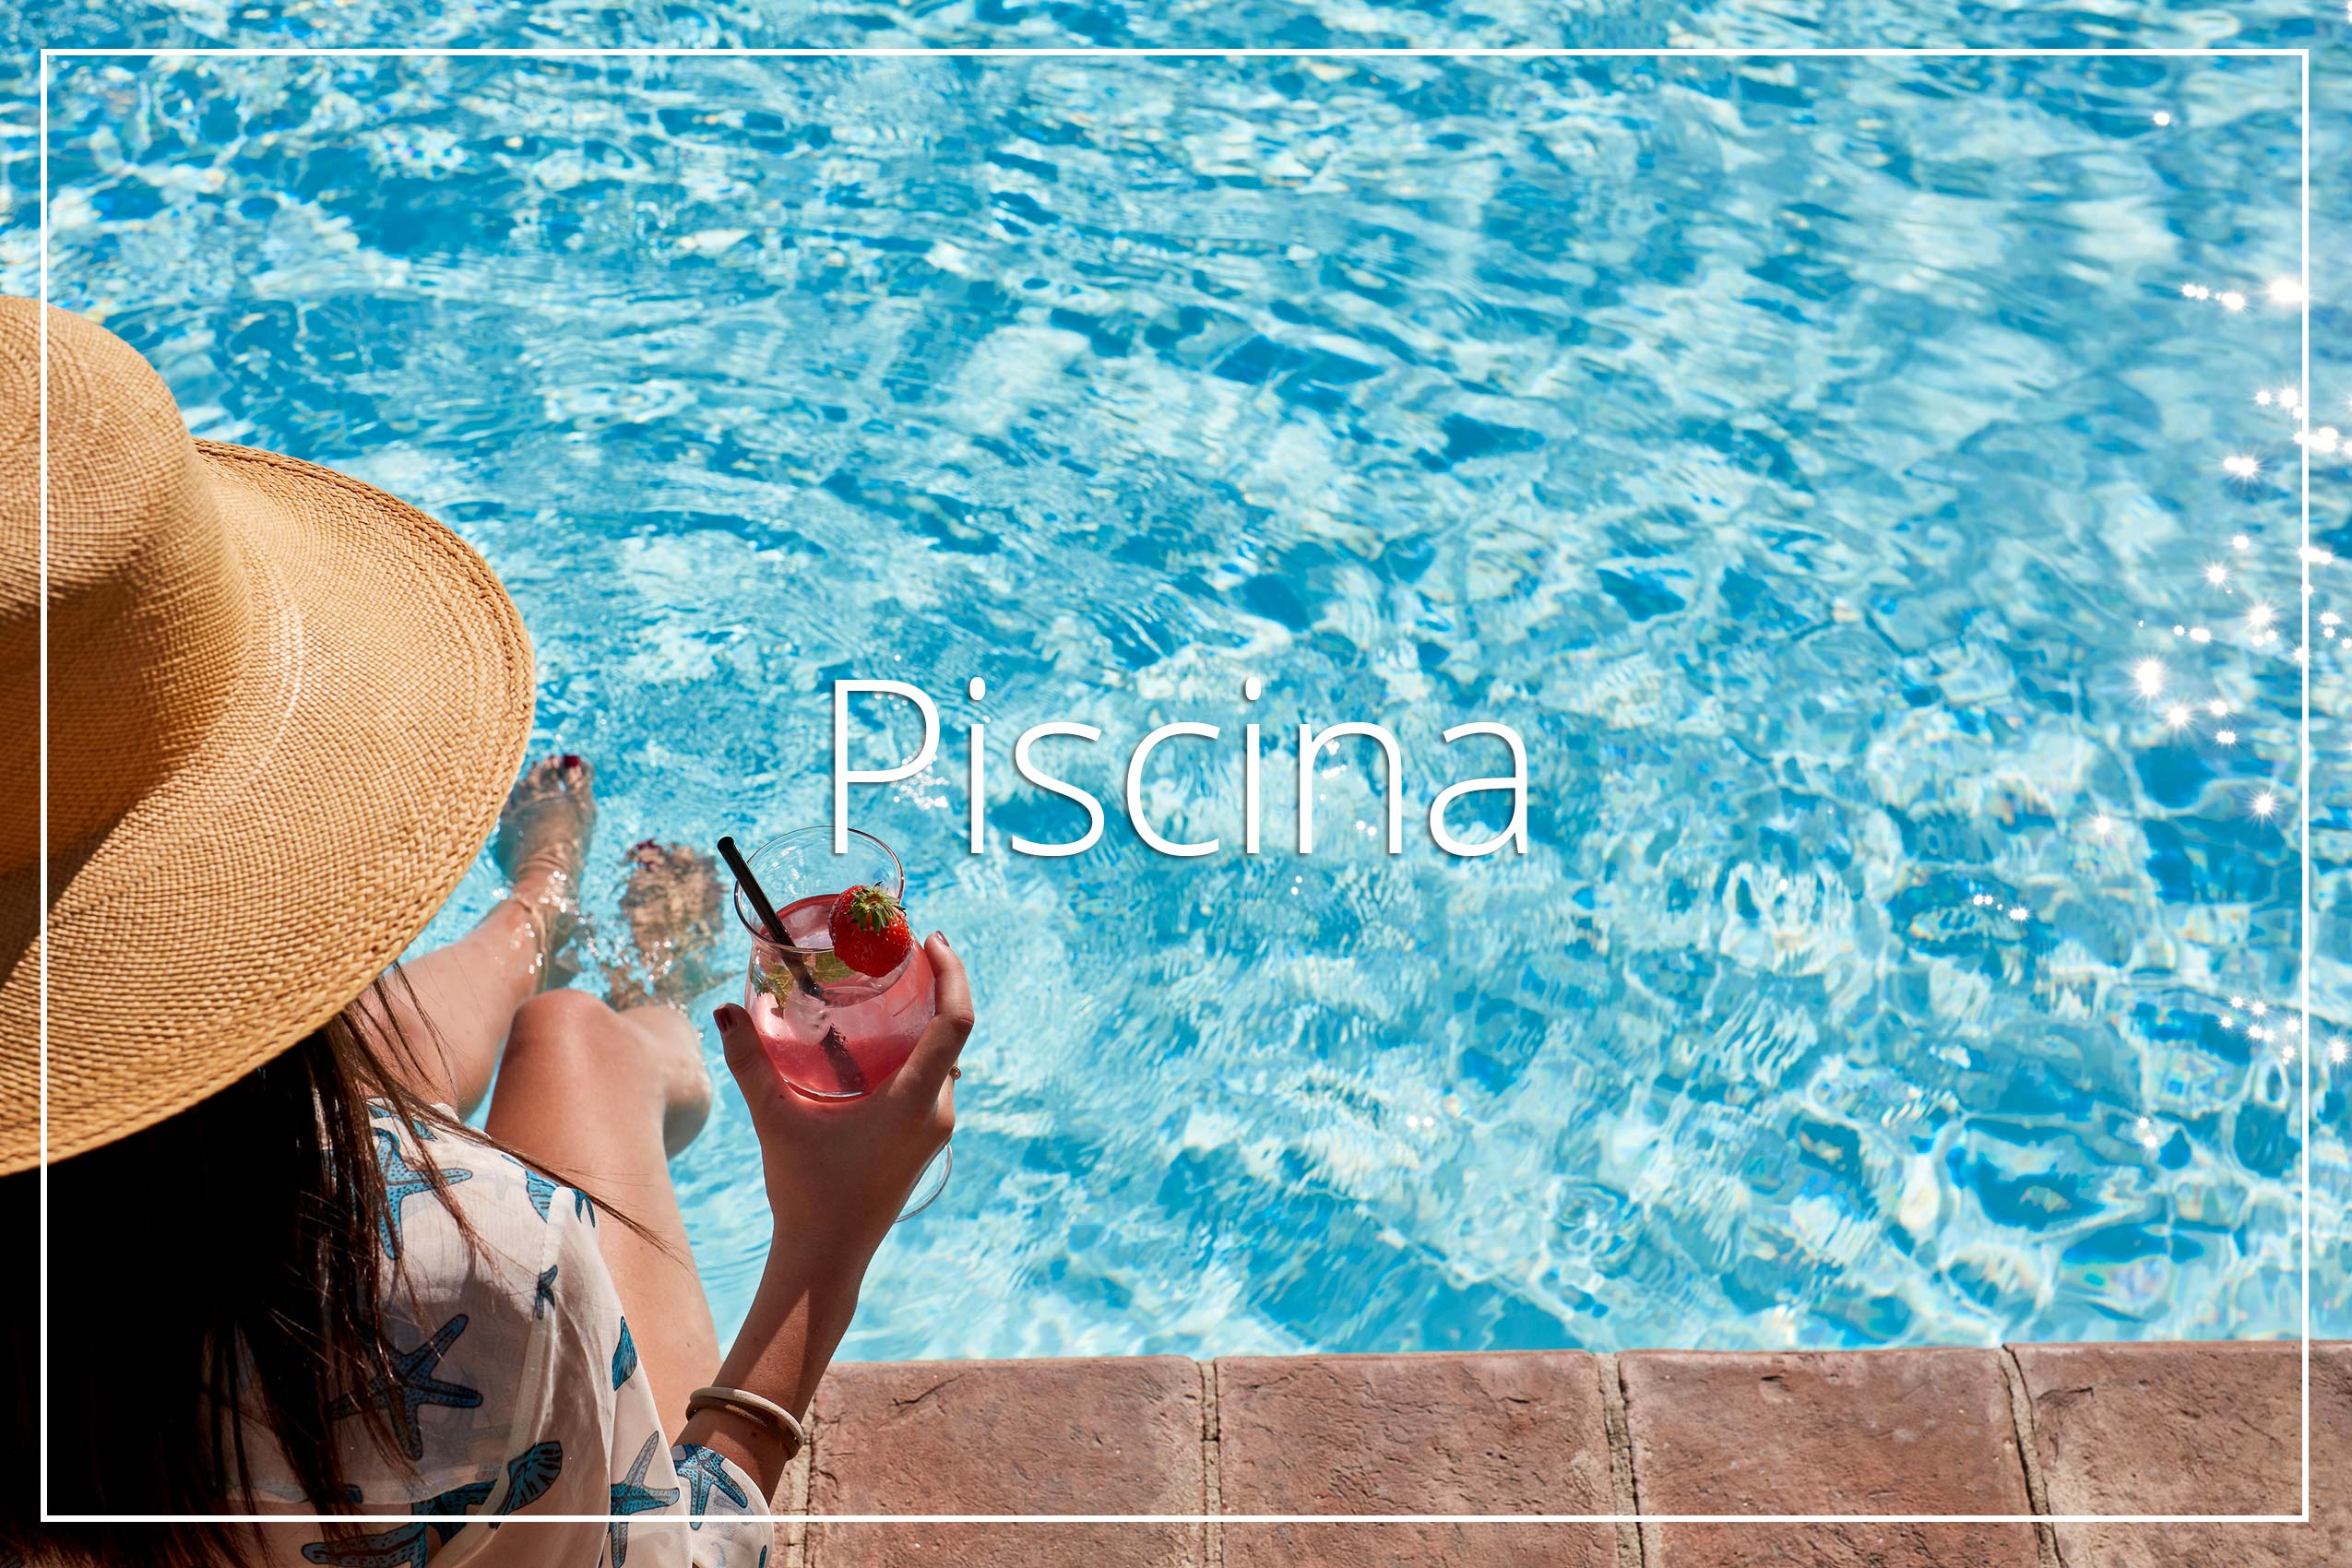 Woman drink at poolside Villa di Piazzano SLH Luxury Hotel Cortona tuscany